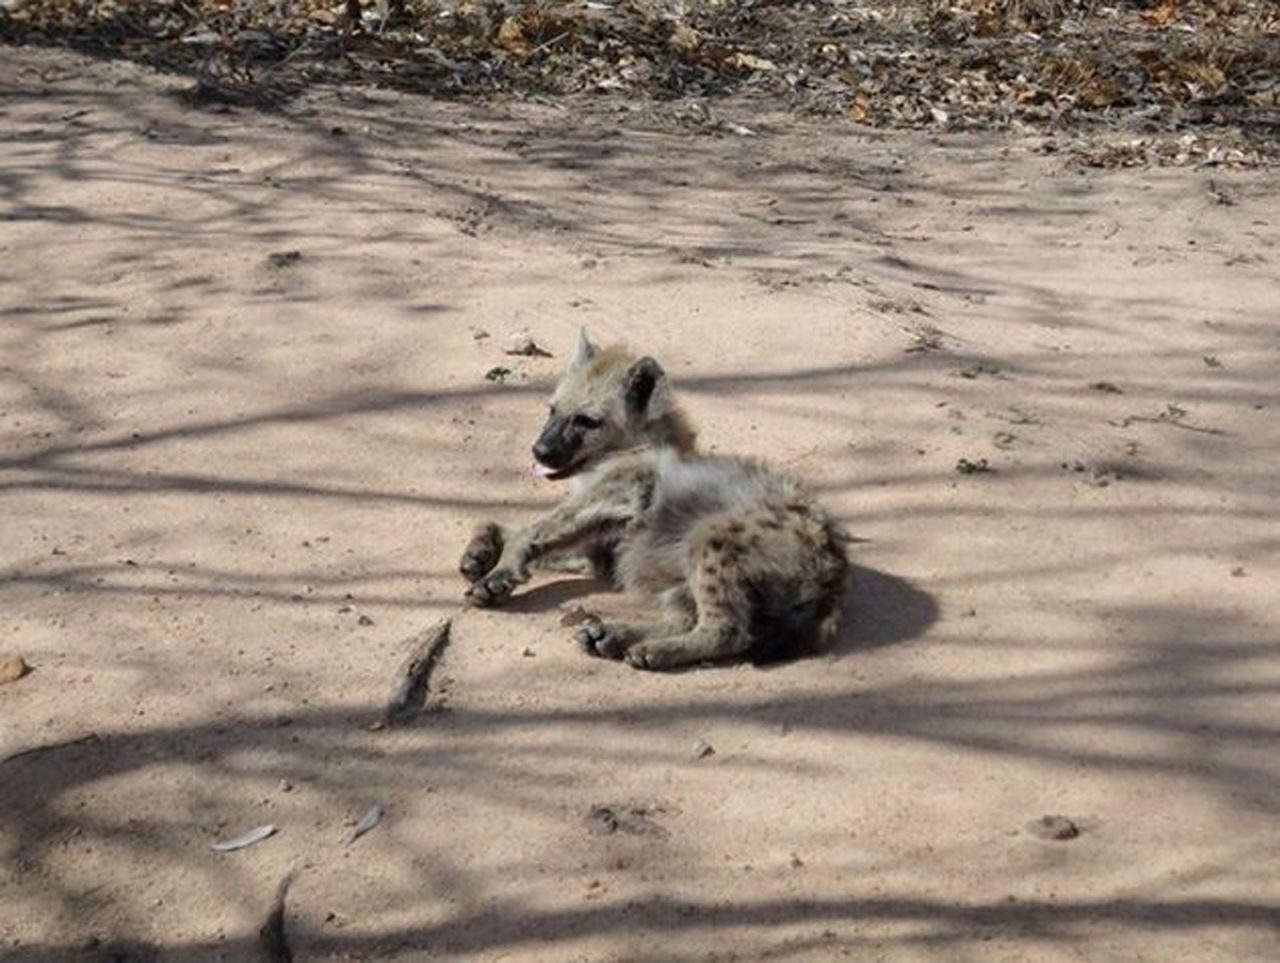 It's debatable how cute this hyena cub is.